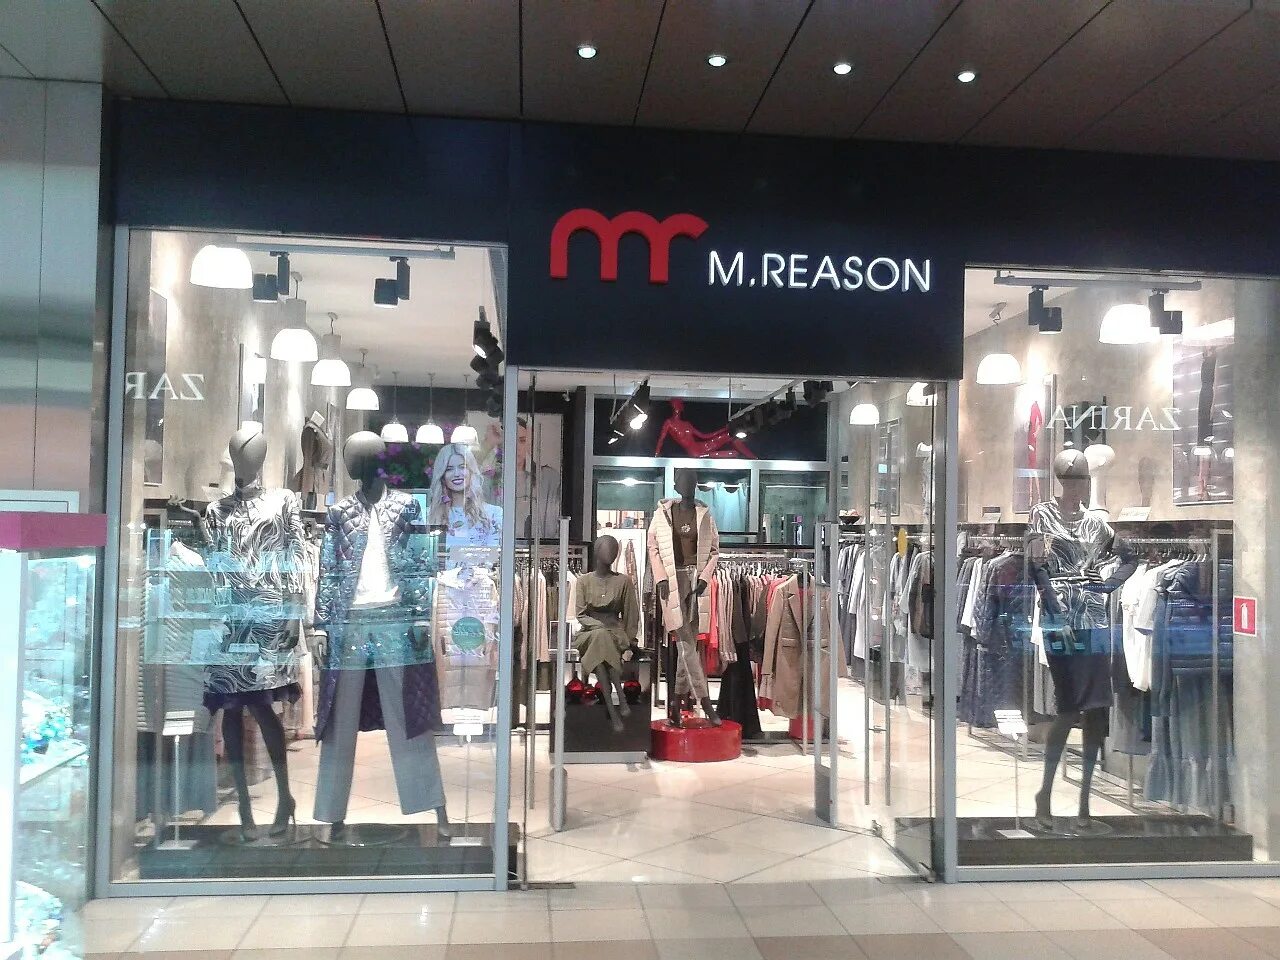 Mr reason. M.reason магазин. M reason одежда магазин. Платье m reason. Mr reason одежда.